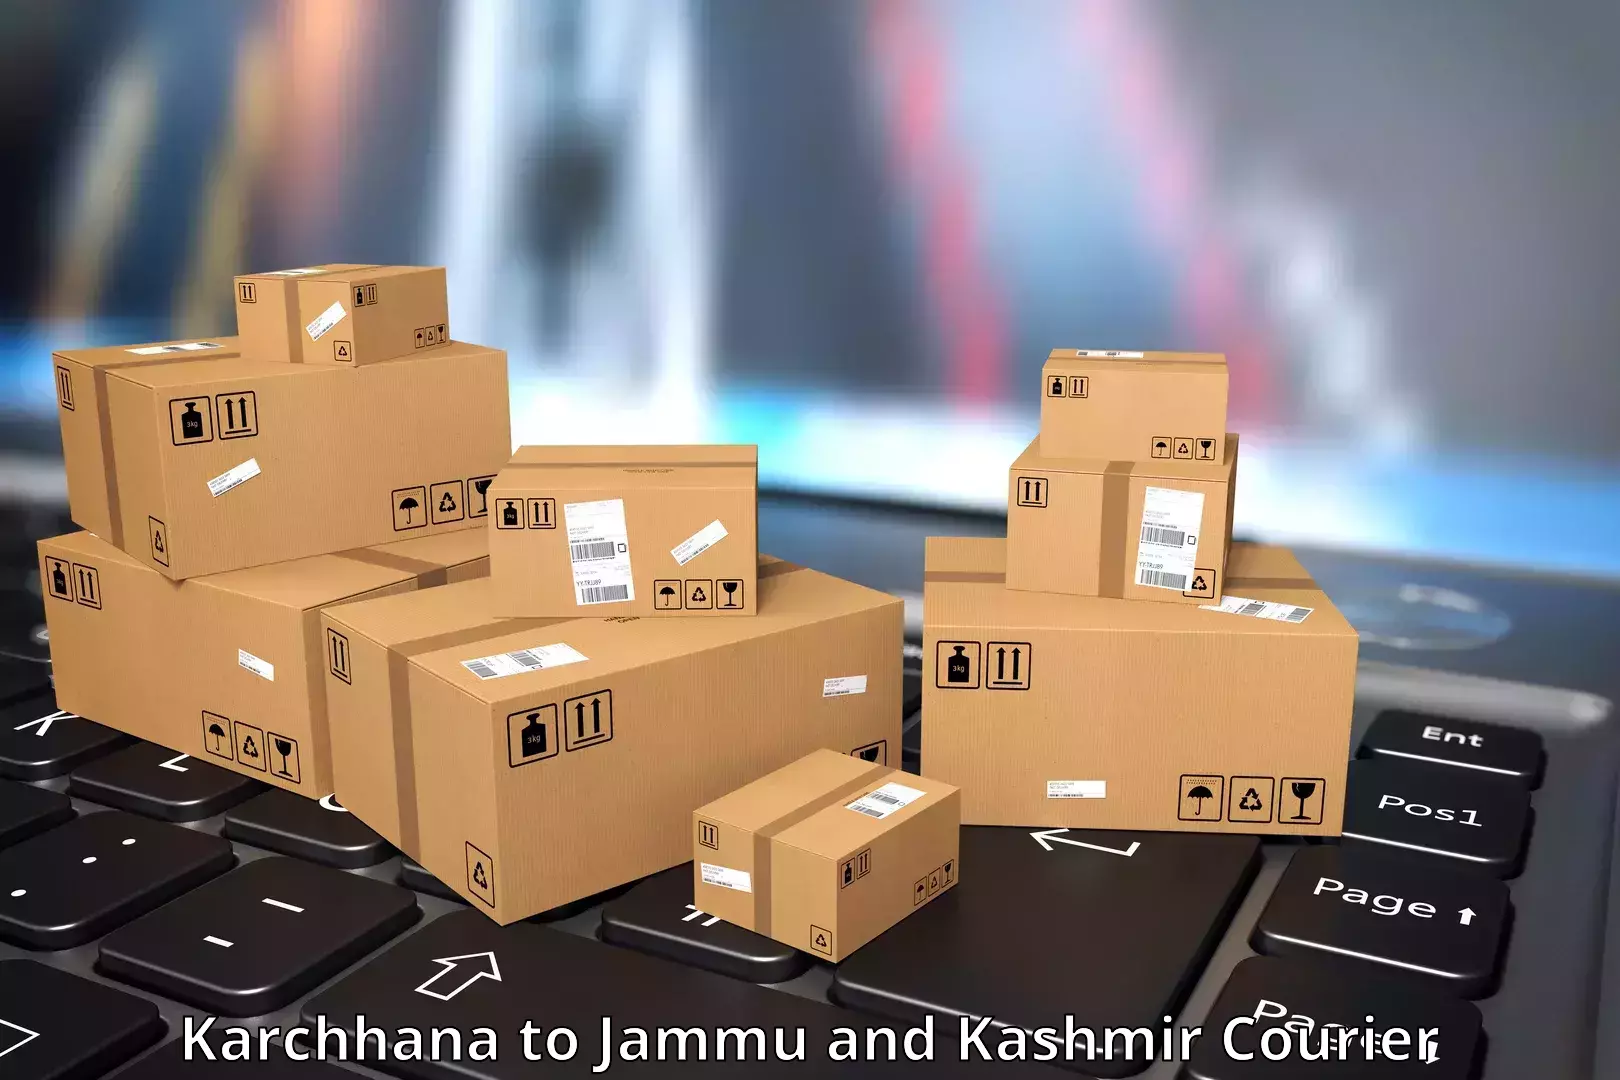 Courier service comparison Karchhana to Jammu and Kashmir